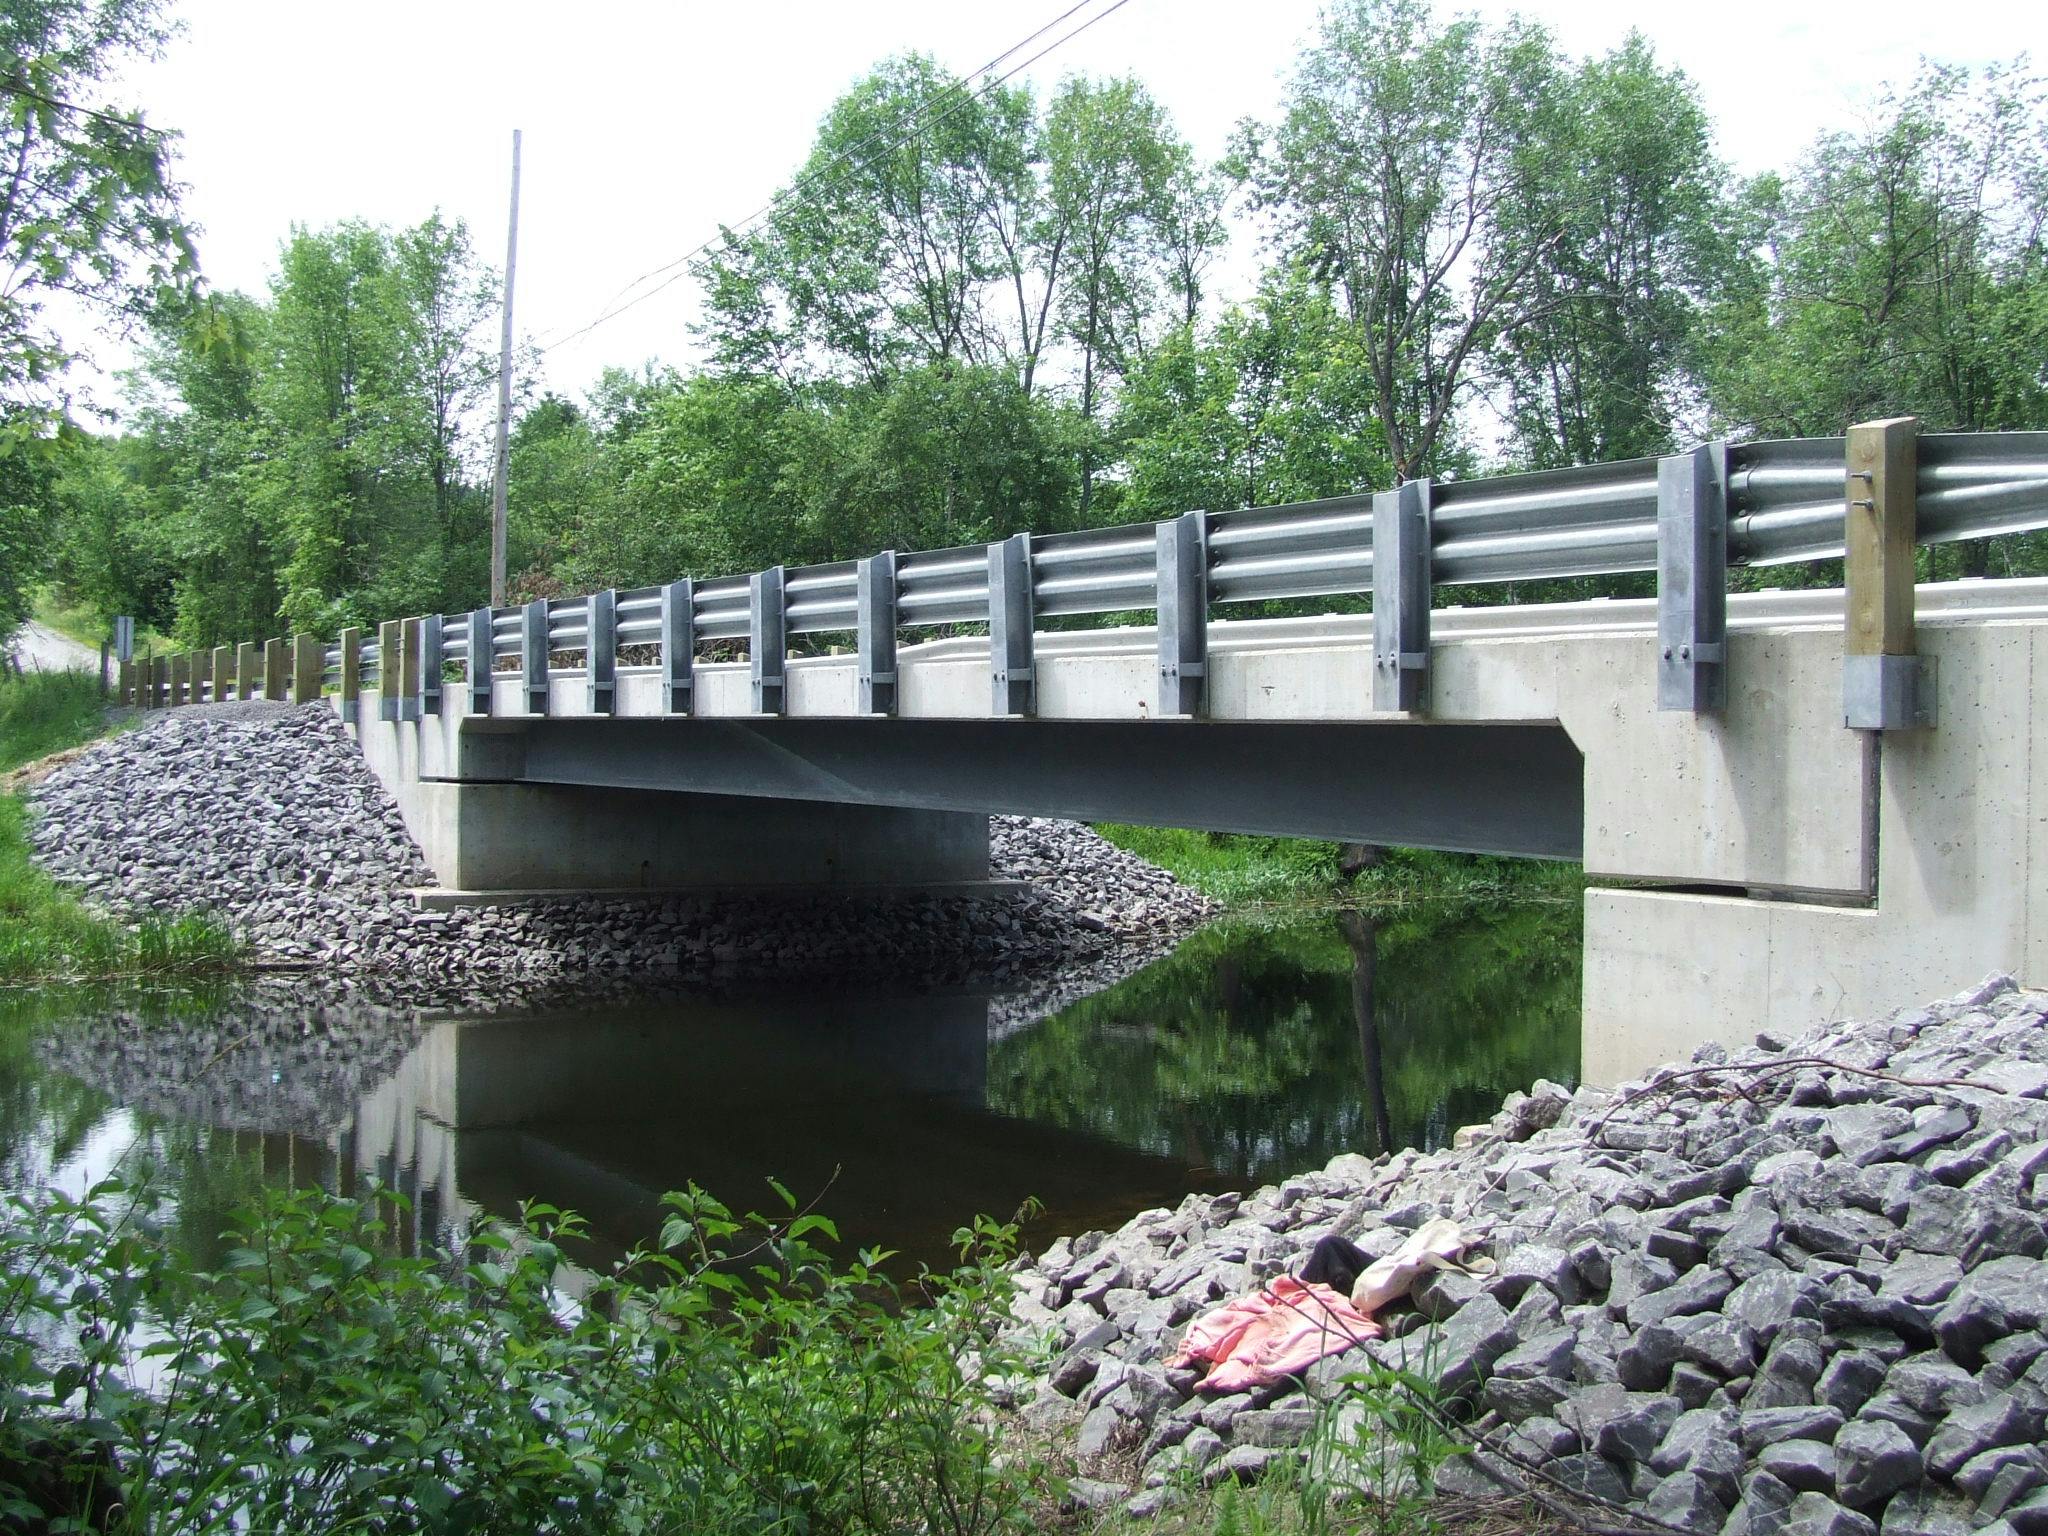 Photo 6: Example of new bridge - side view